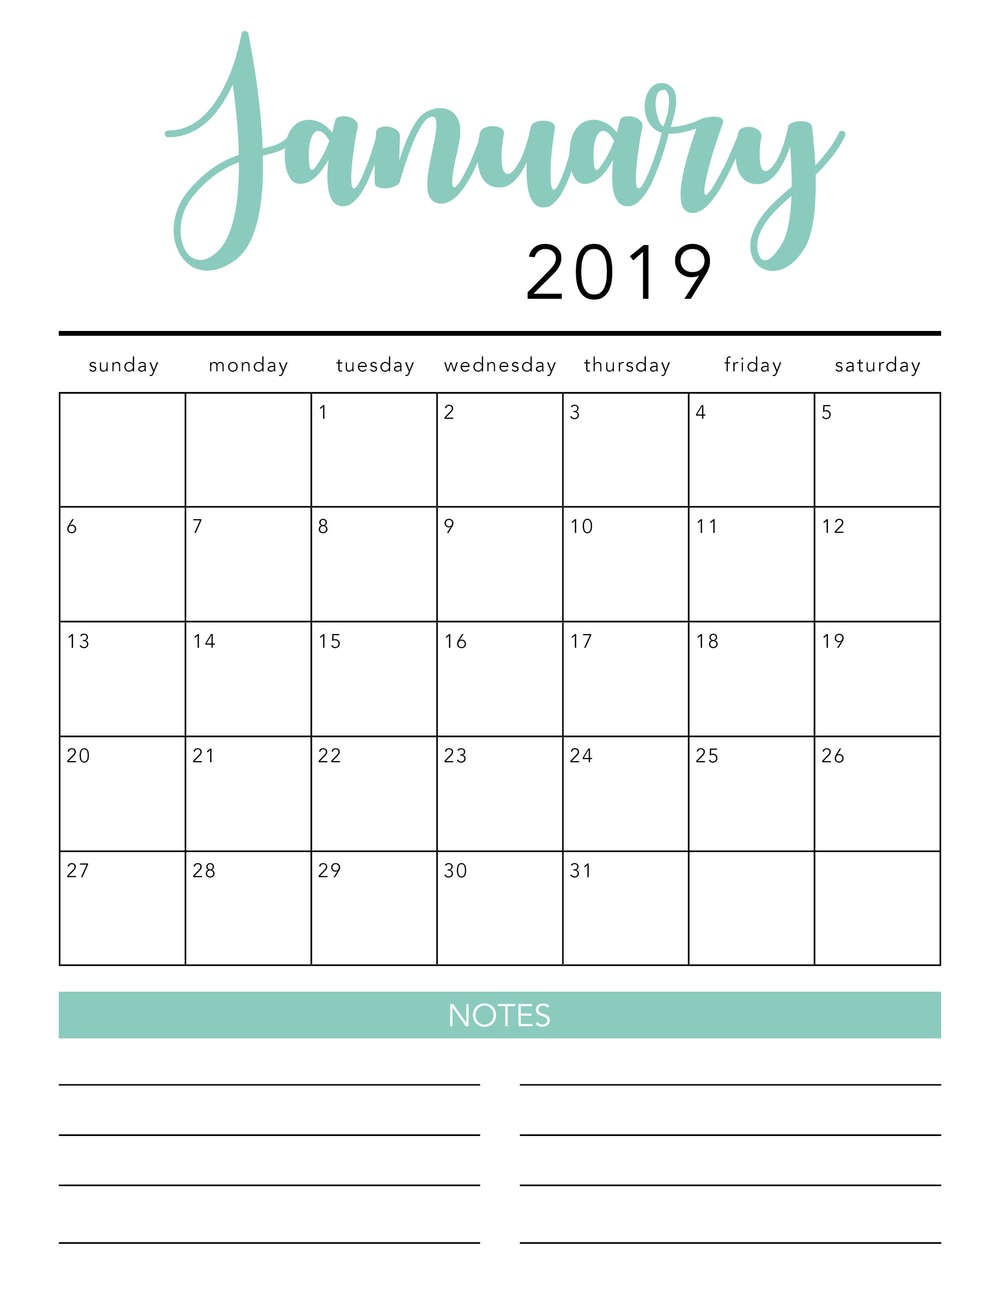 FREE 2019 Printable Calendar Template 2 colors I